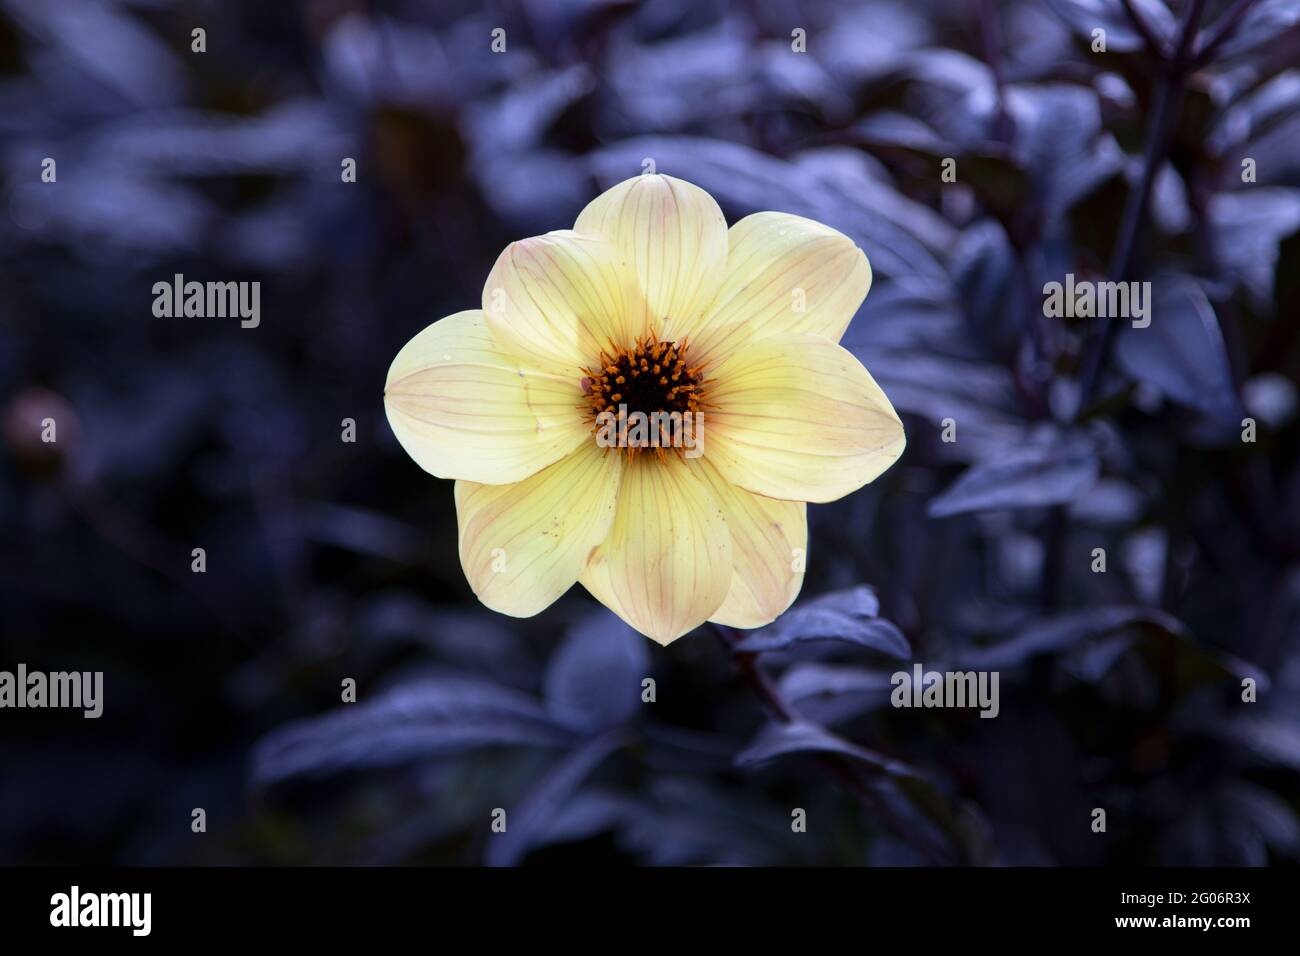 Yellow dahlia flower with dark foliage Stock Photo